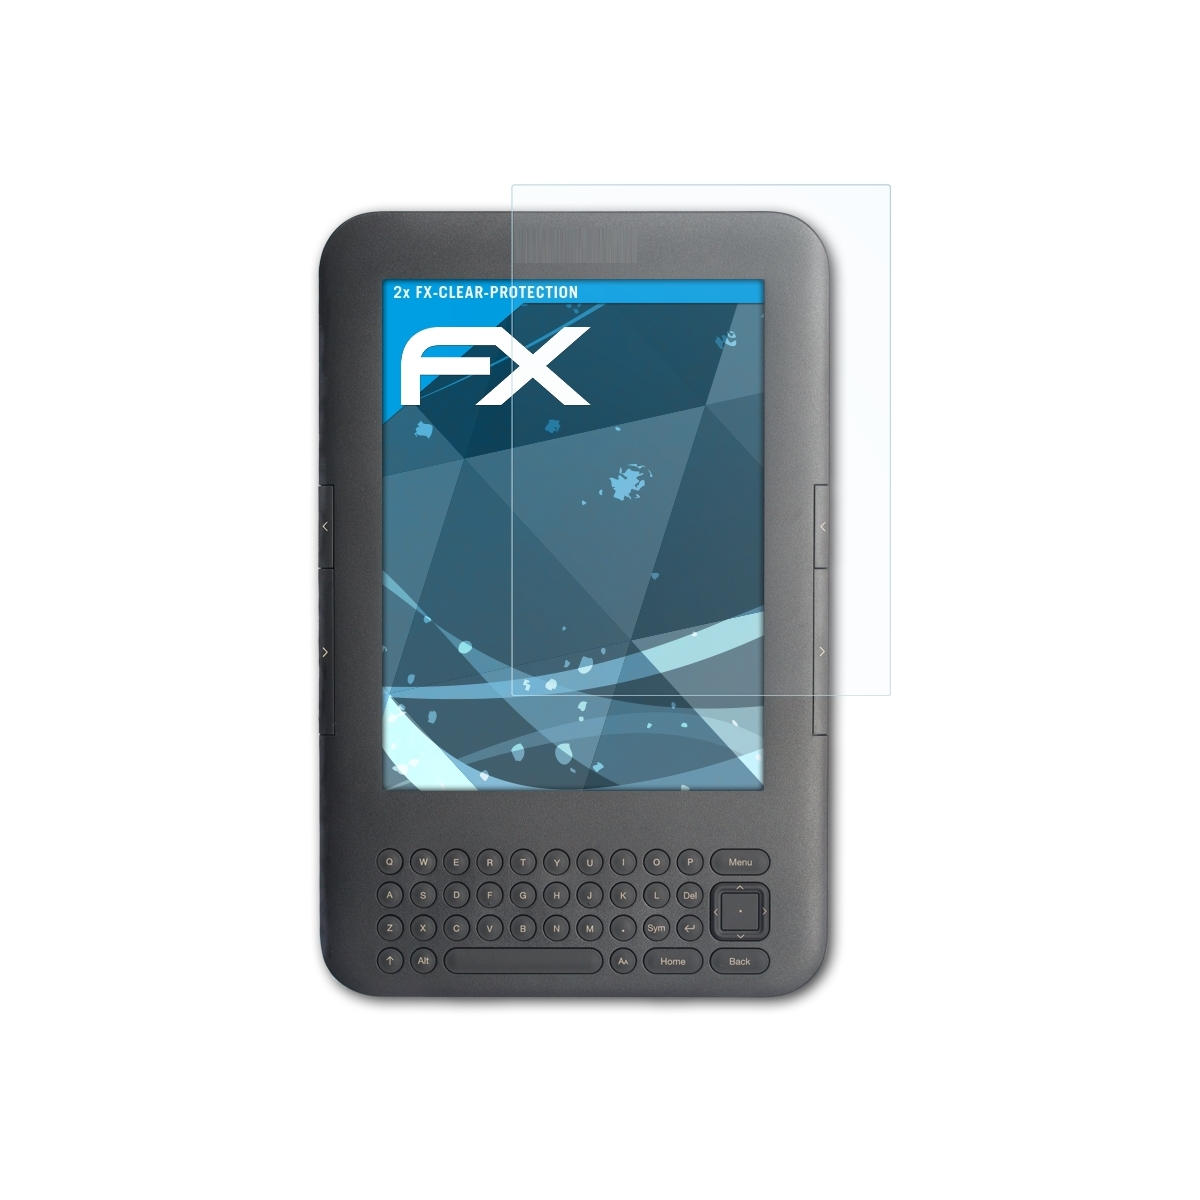 ATFOLIX 2x FX-Clear Displayschutz(für Amazon & Kindle (WiFi 3G)) Keyboard